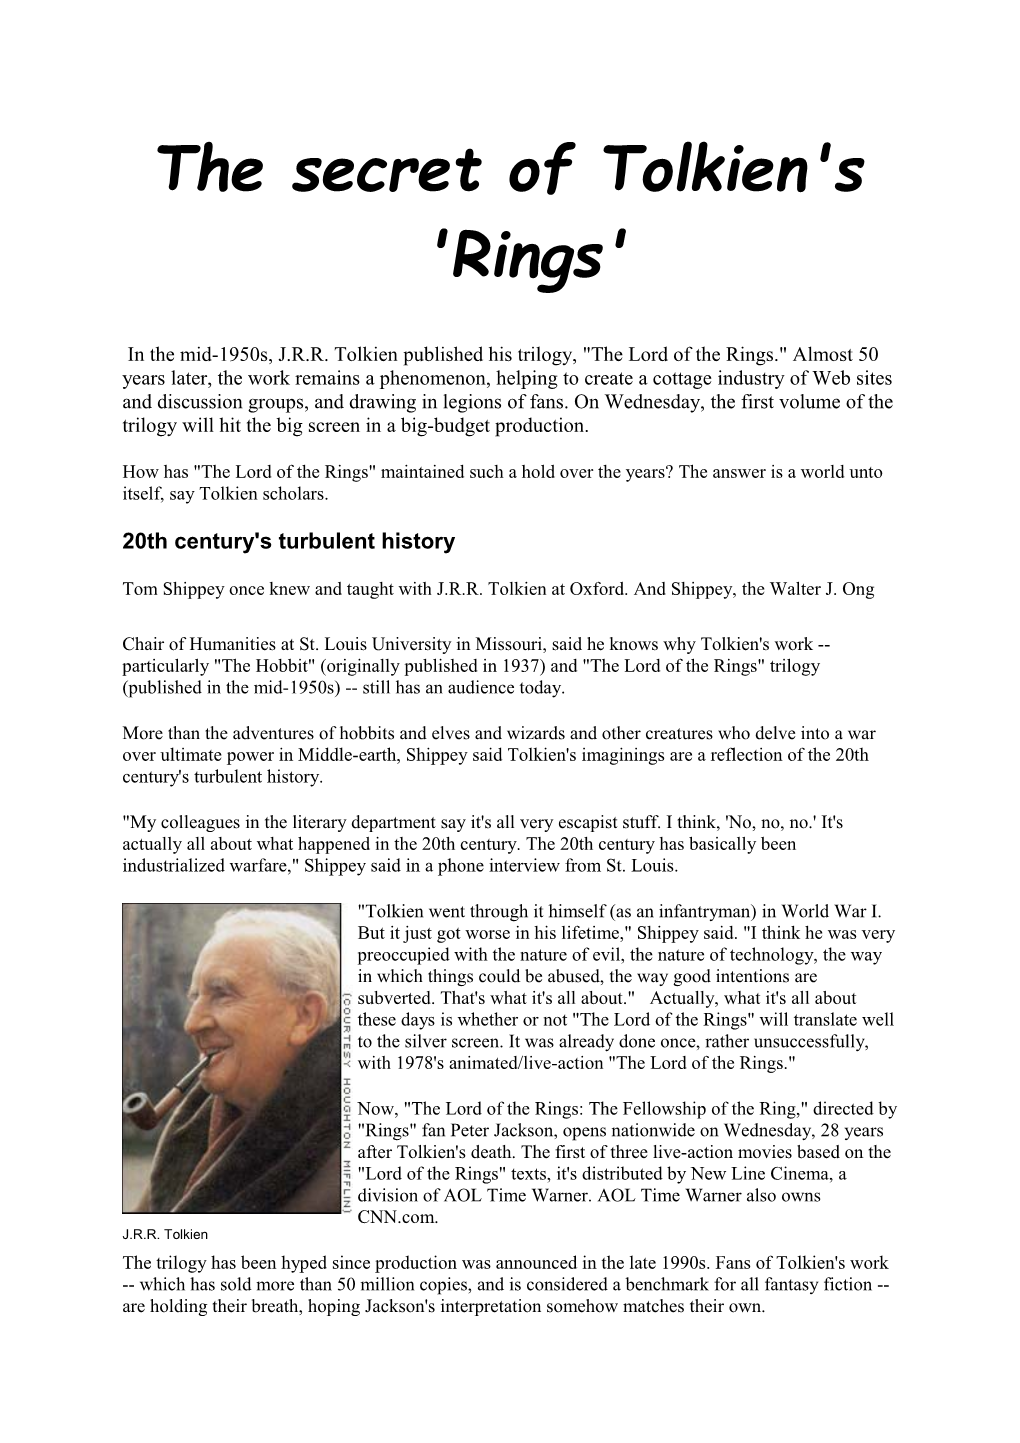 The Secret of Tolkien's 'Rings'